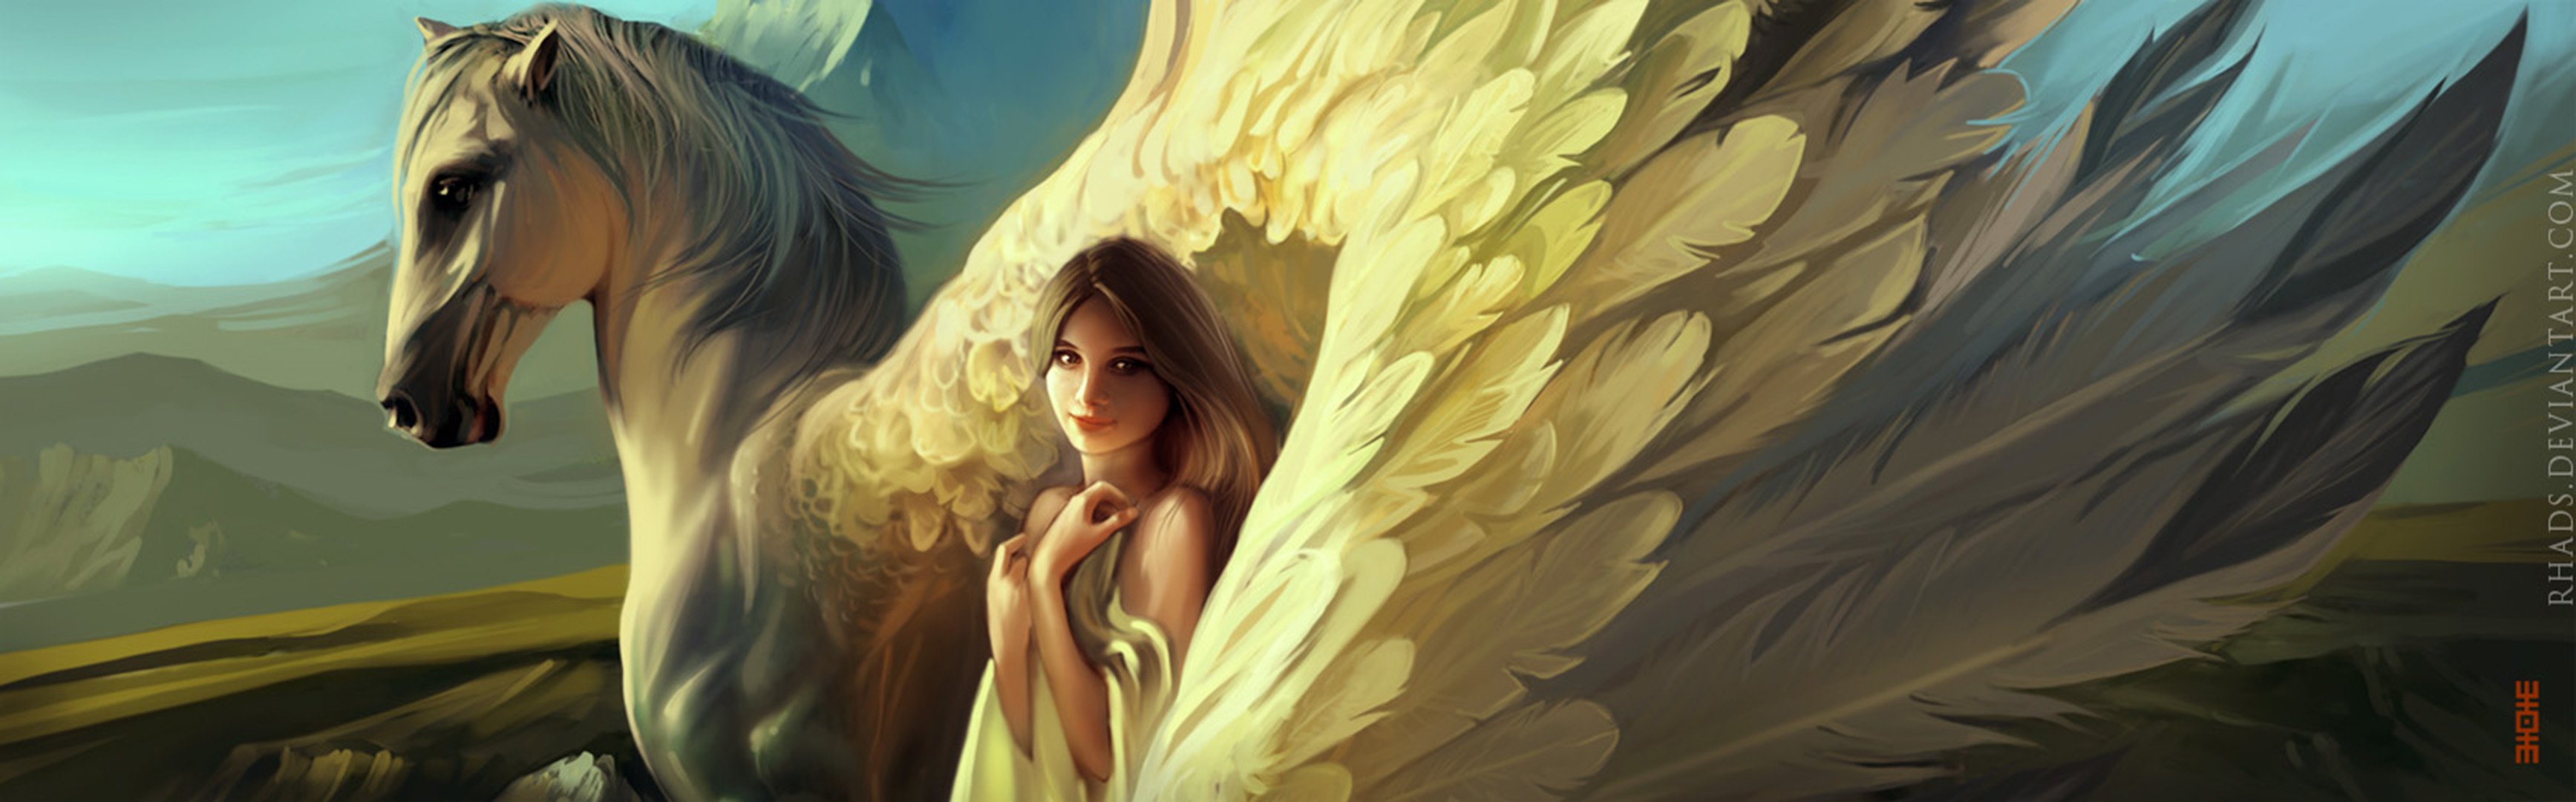 pegasus, Angel, Painting, Girl, Artwork, Mood, Love, Fantasy, Feathers, Wings Wallpaper